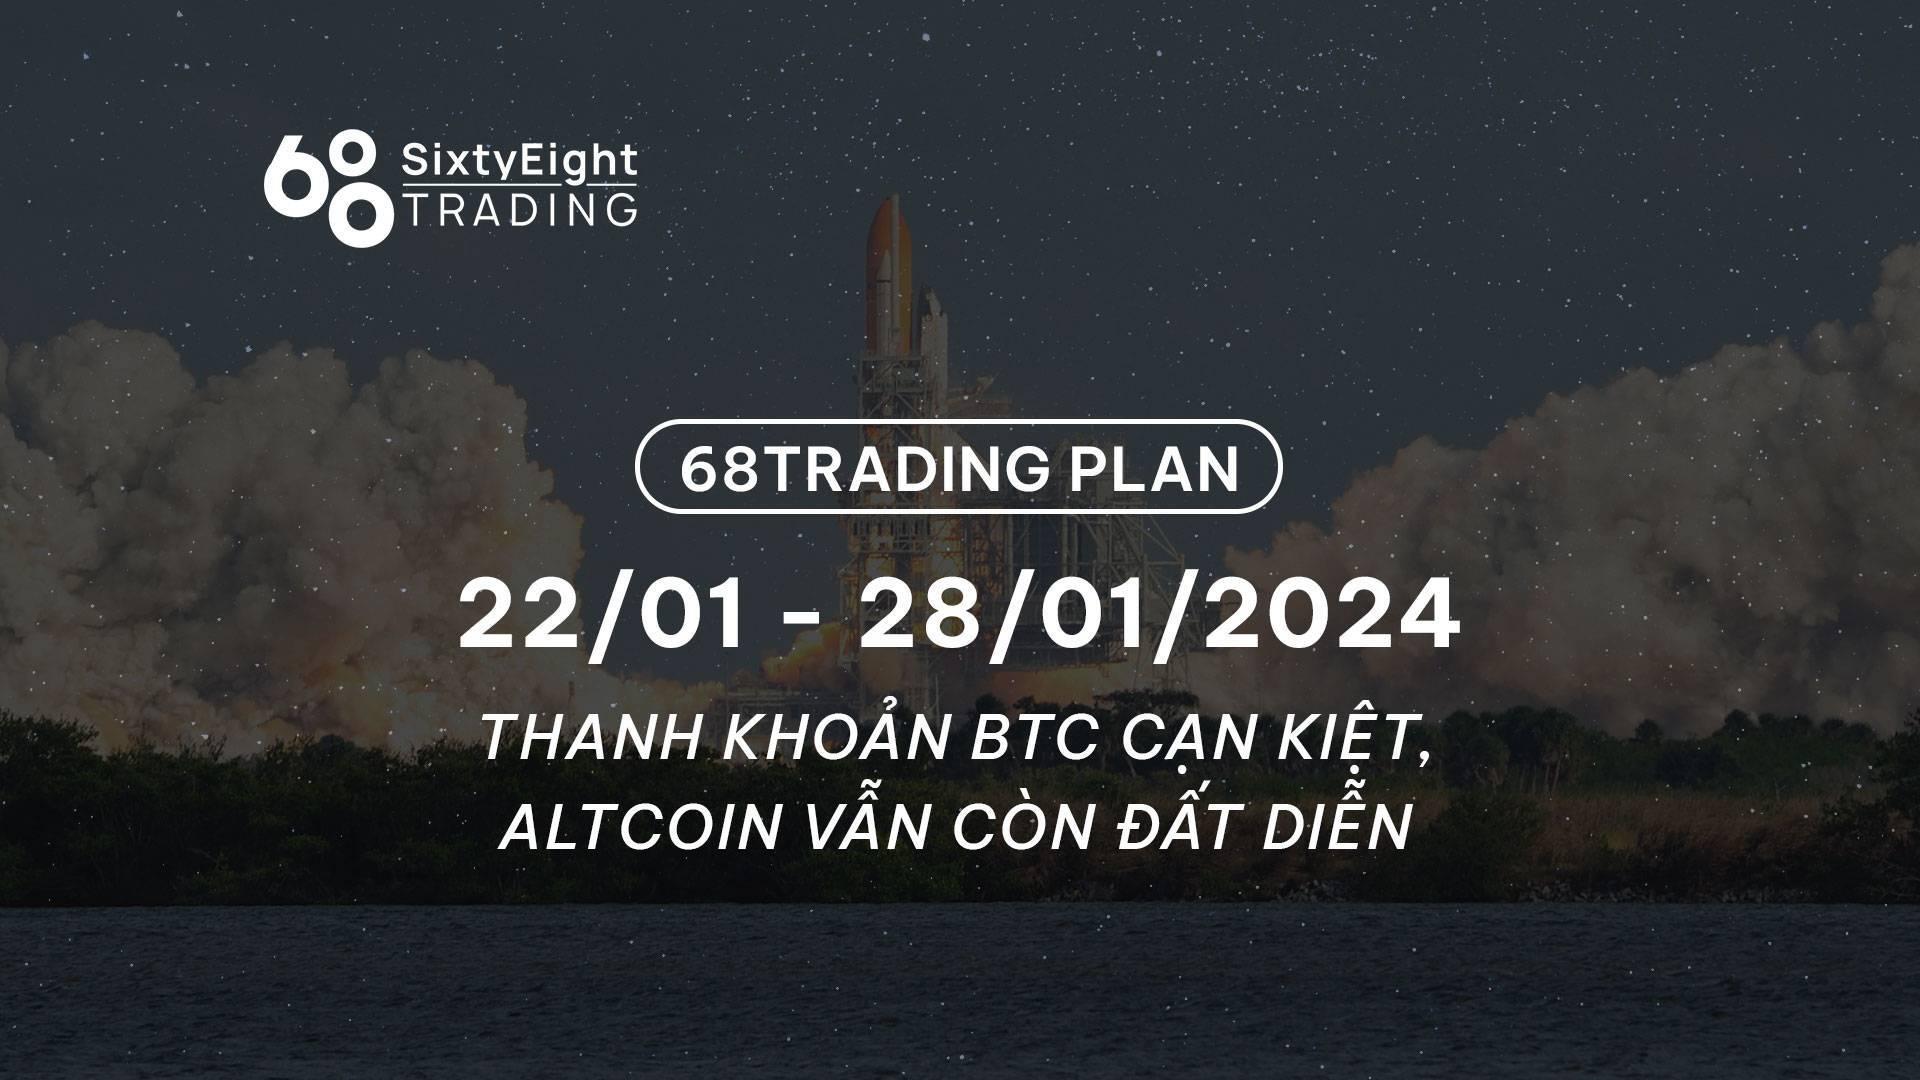 68-trading-plan-2201-28012024-thanh-khoan-btc-can-kiet-altcoin-van-con-dat-dien